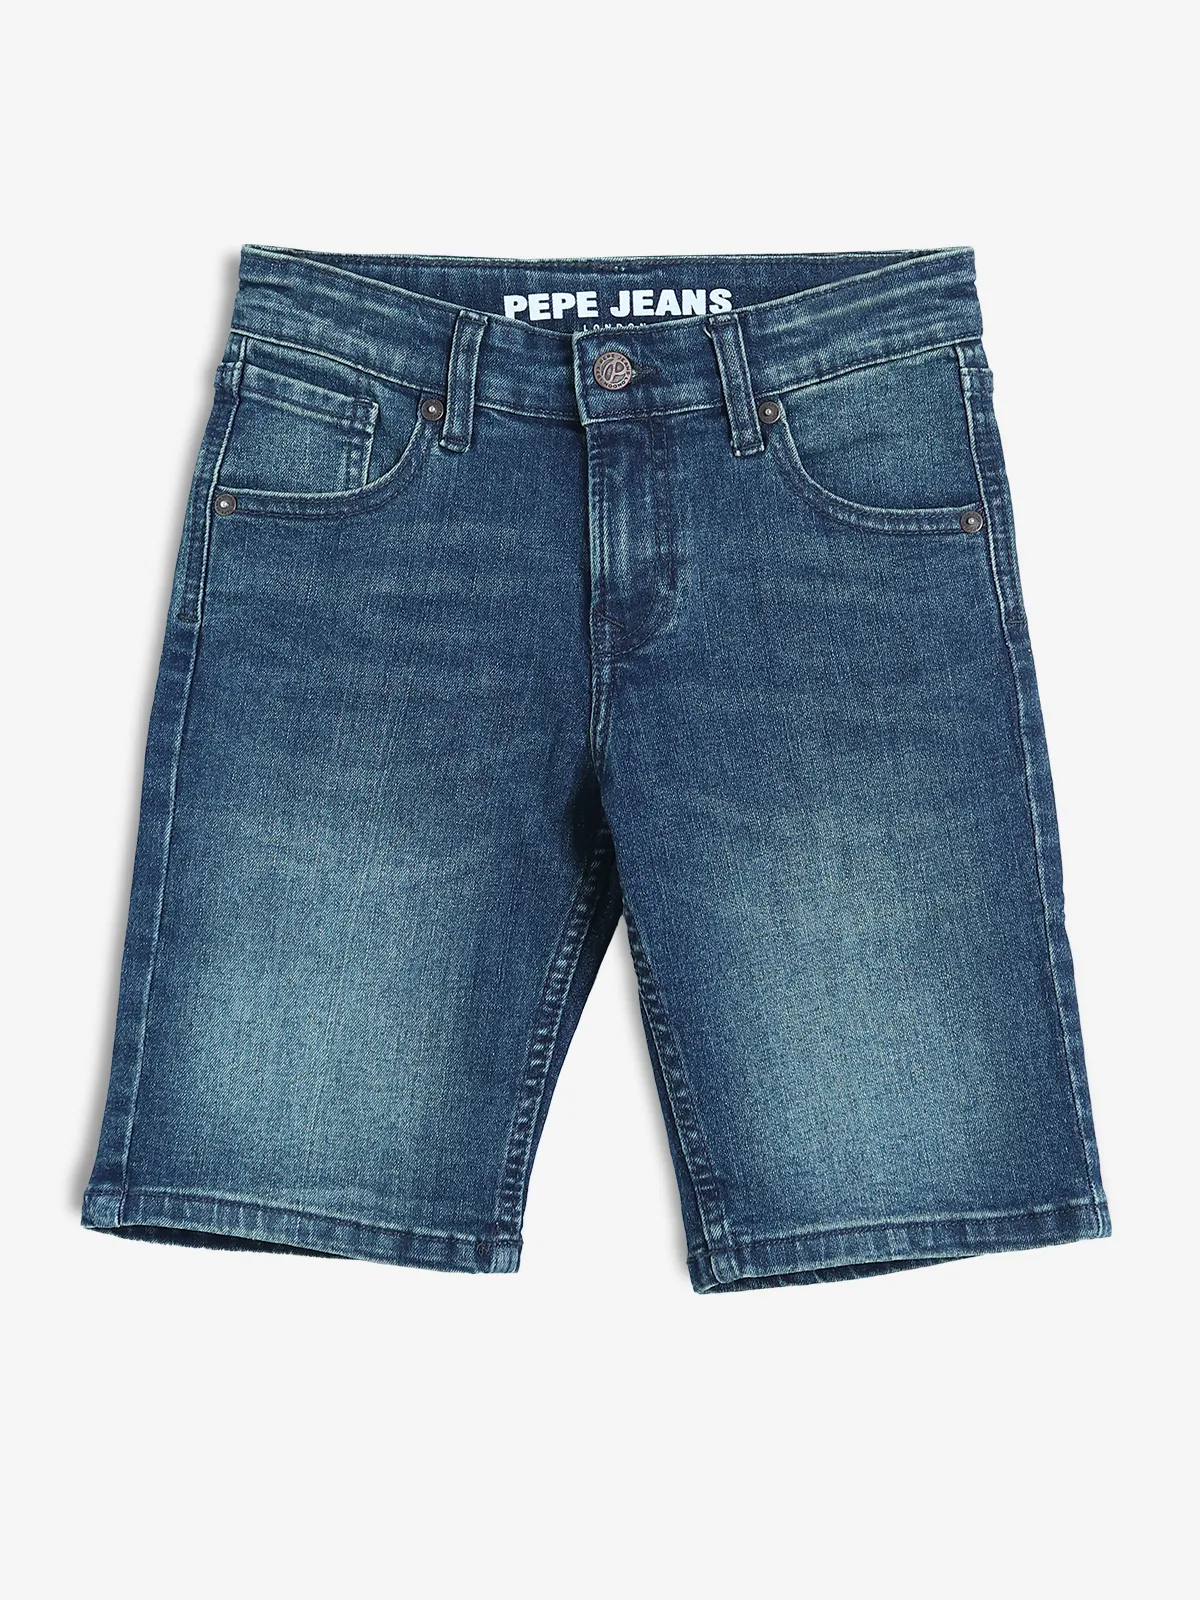 PEPE JEANS blue washed denim shorts